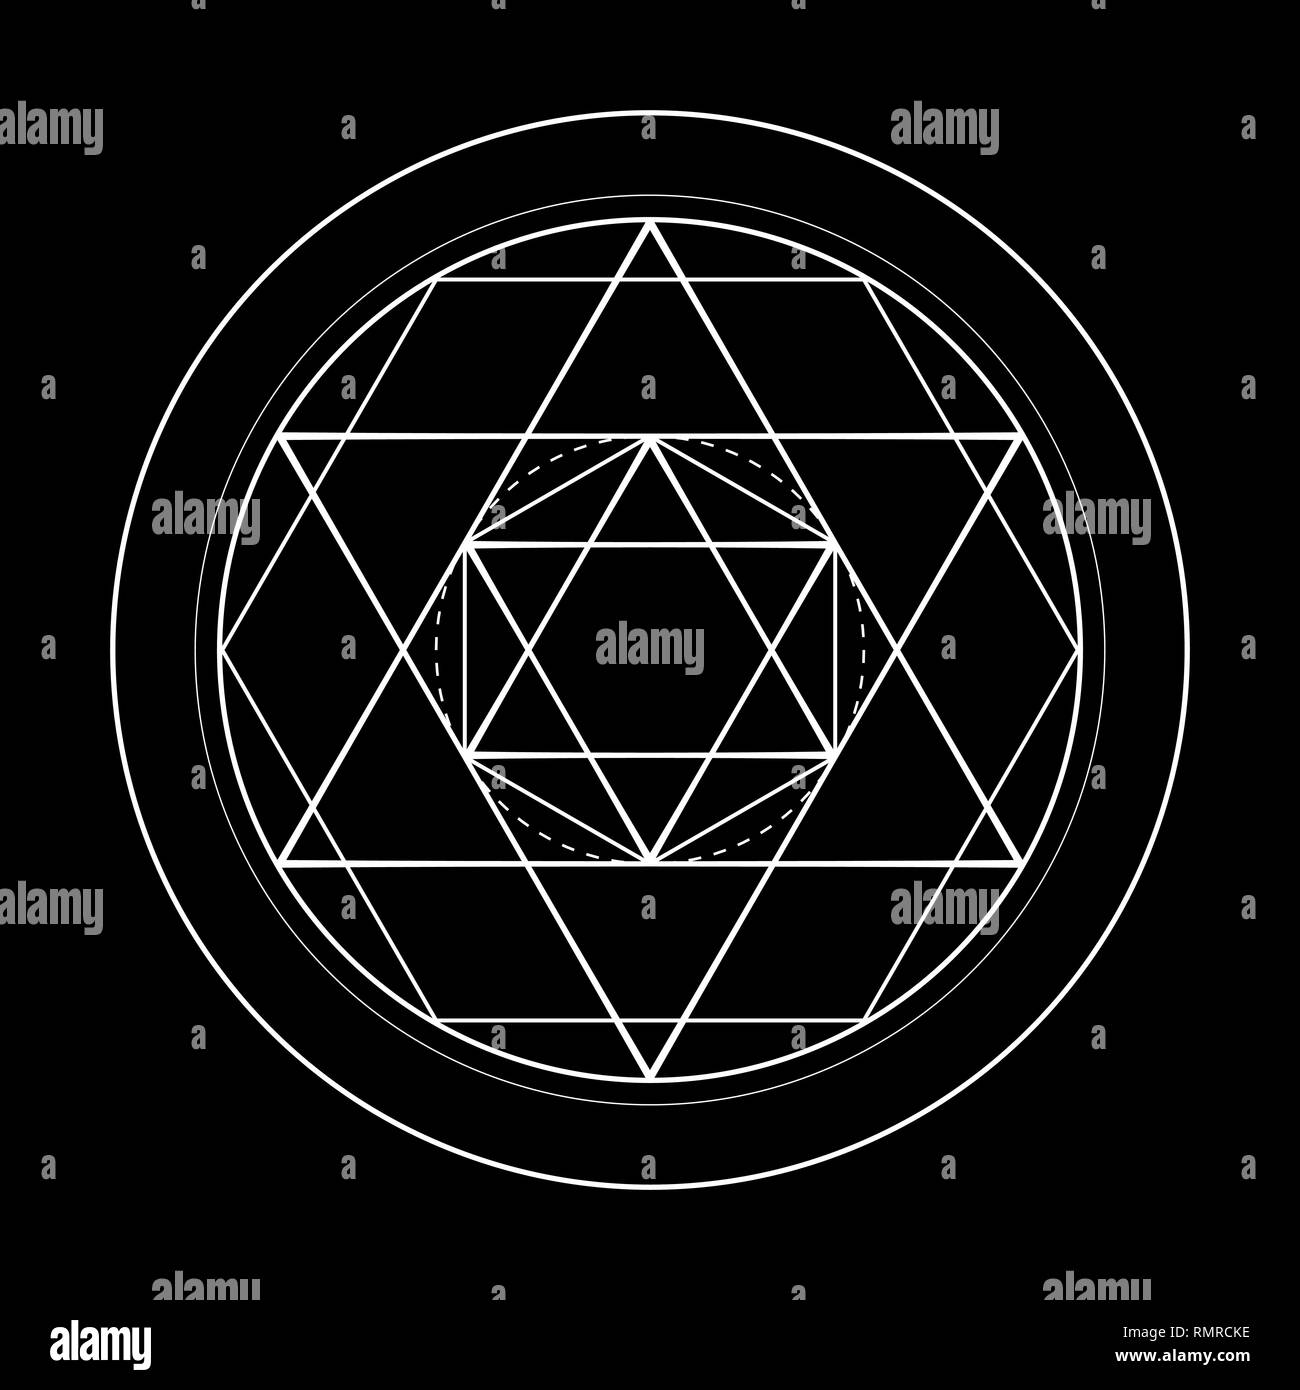 sacred geometry david star symbol illustration Stock Vector